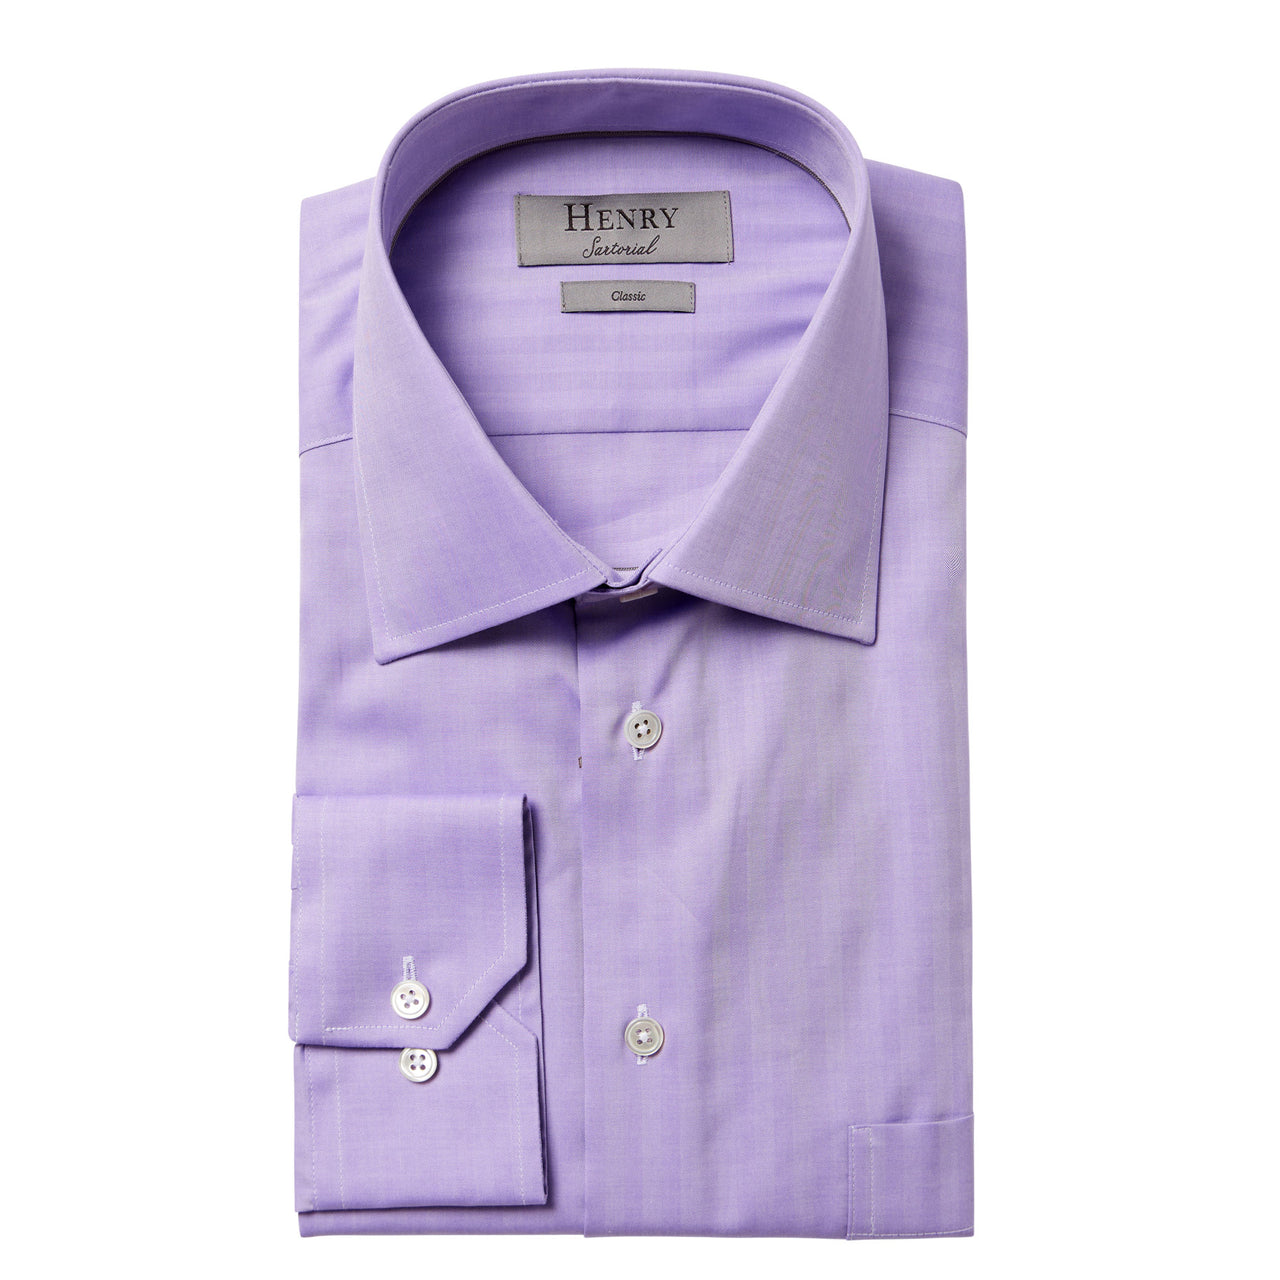 HENRY SARTORIAL Plain Twill Business Single Cuff Classic Fit Shirt PURPLE